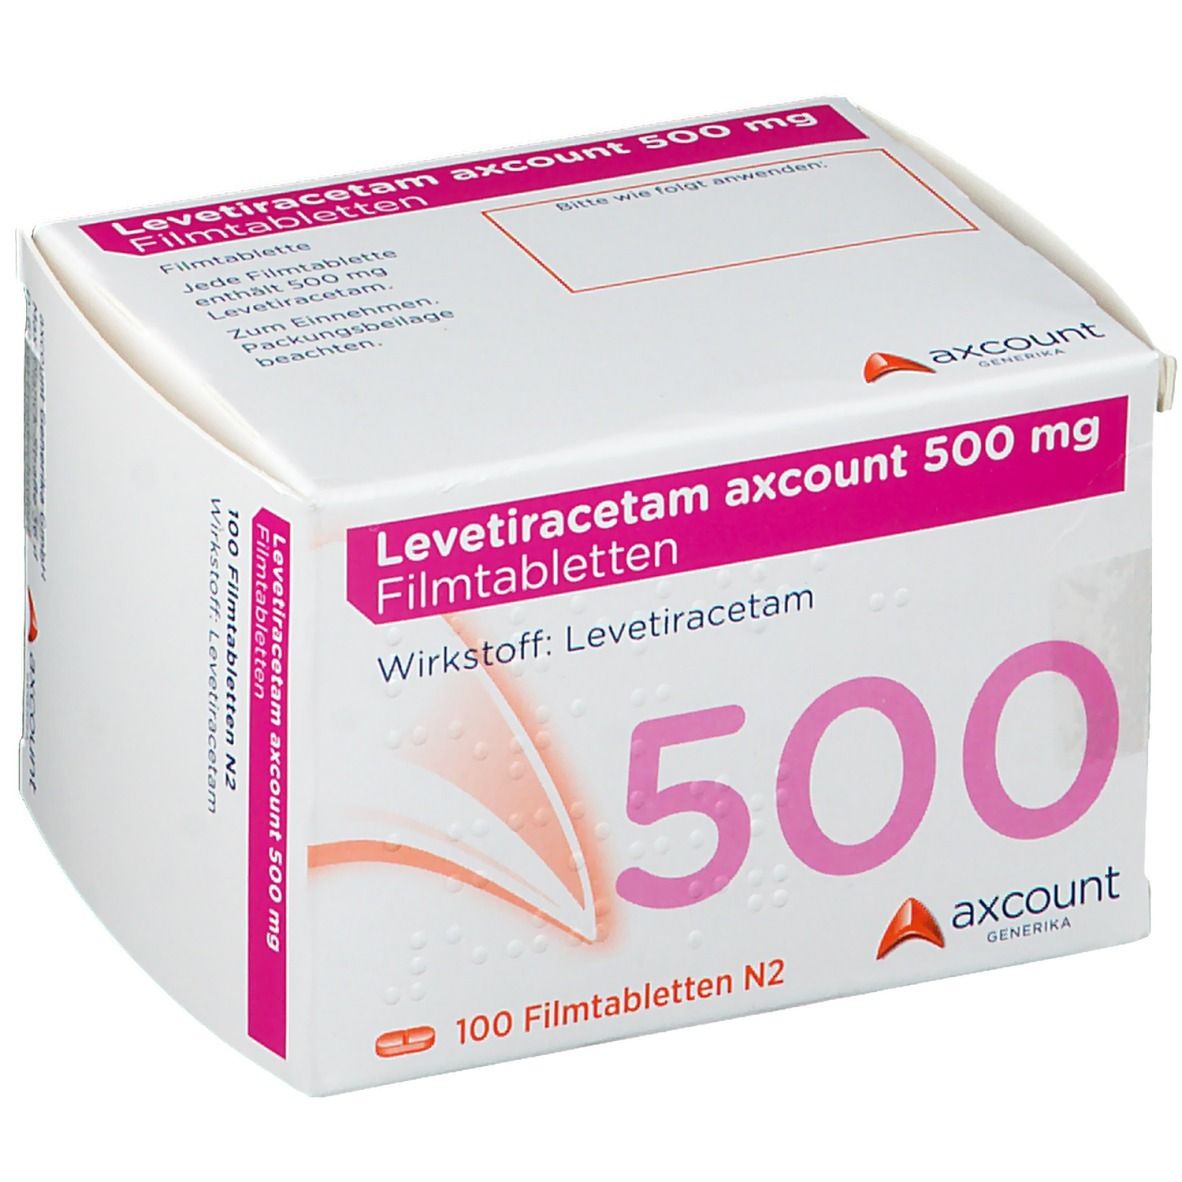 Levetiracetam axcount 500 mg